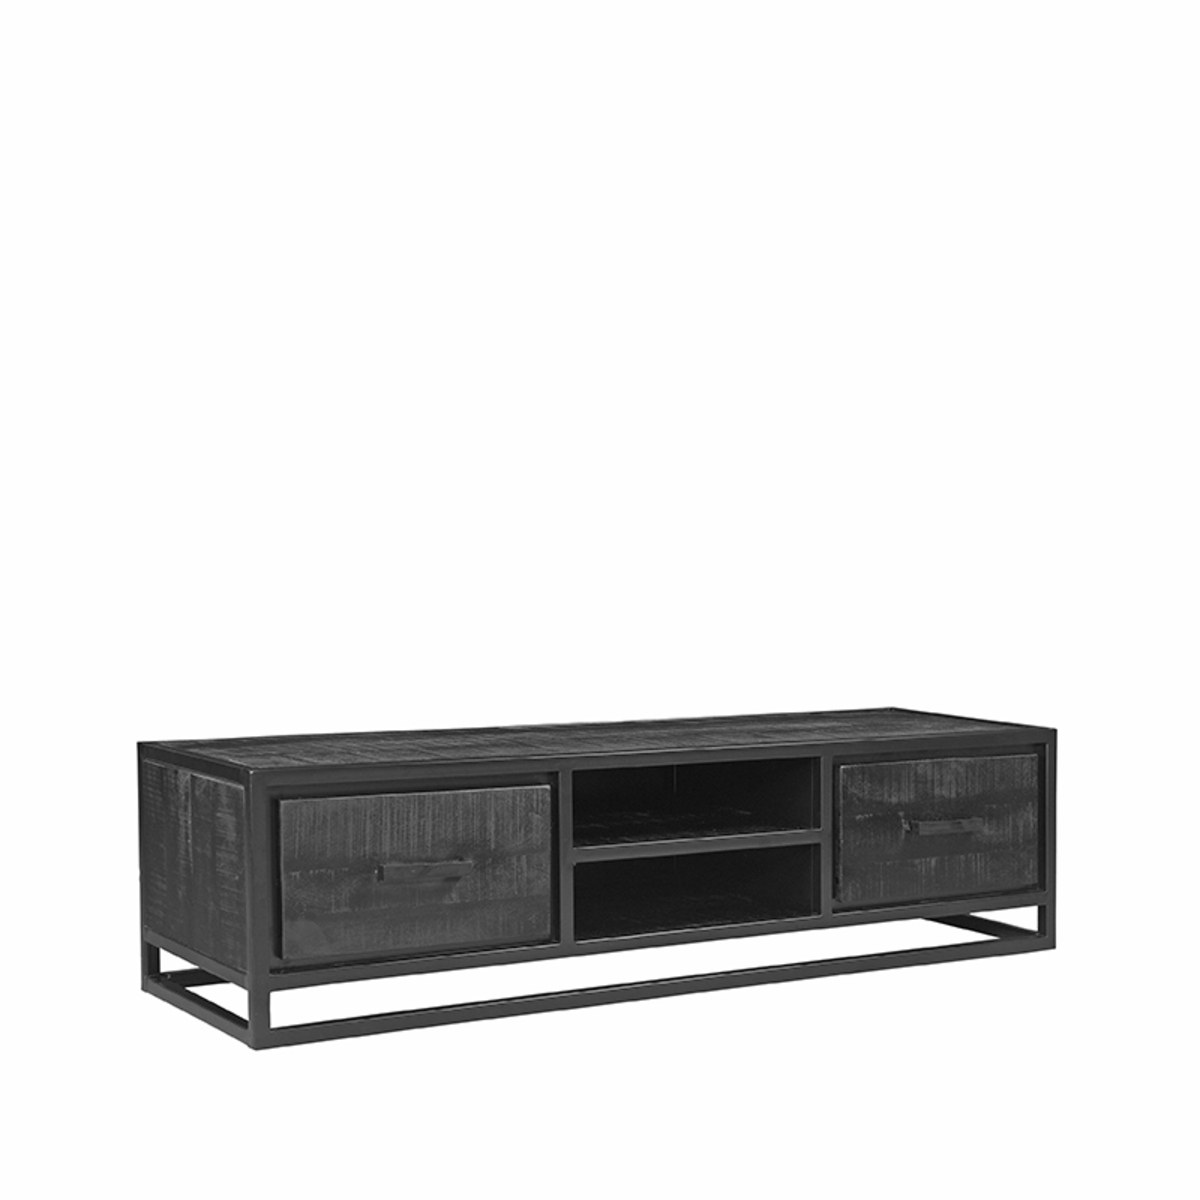 LABEL51 Tv-meubel Chili - Zwart - Mangohout - 160 cm